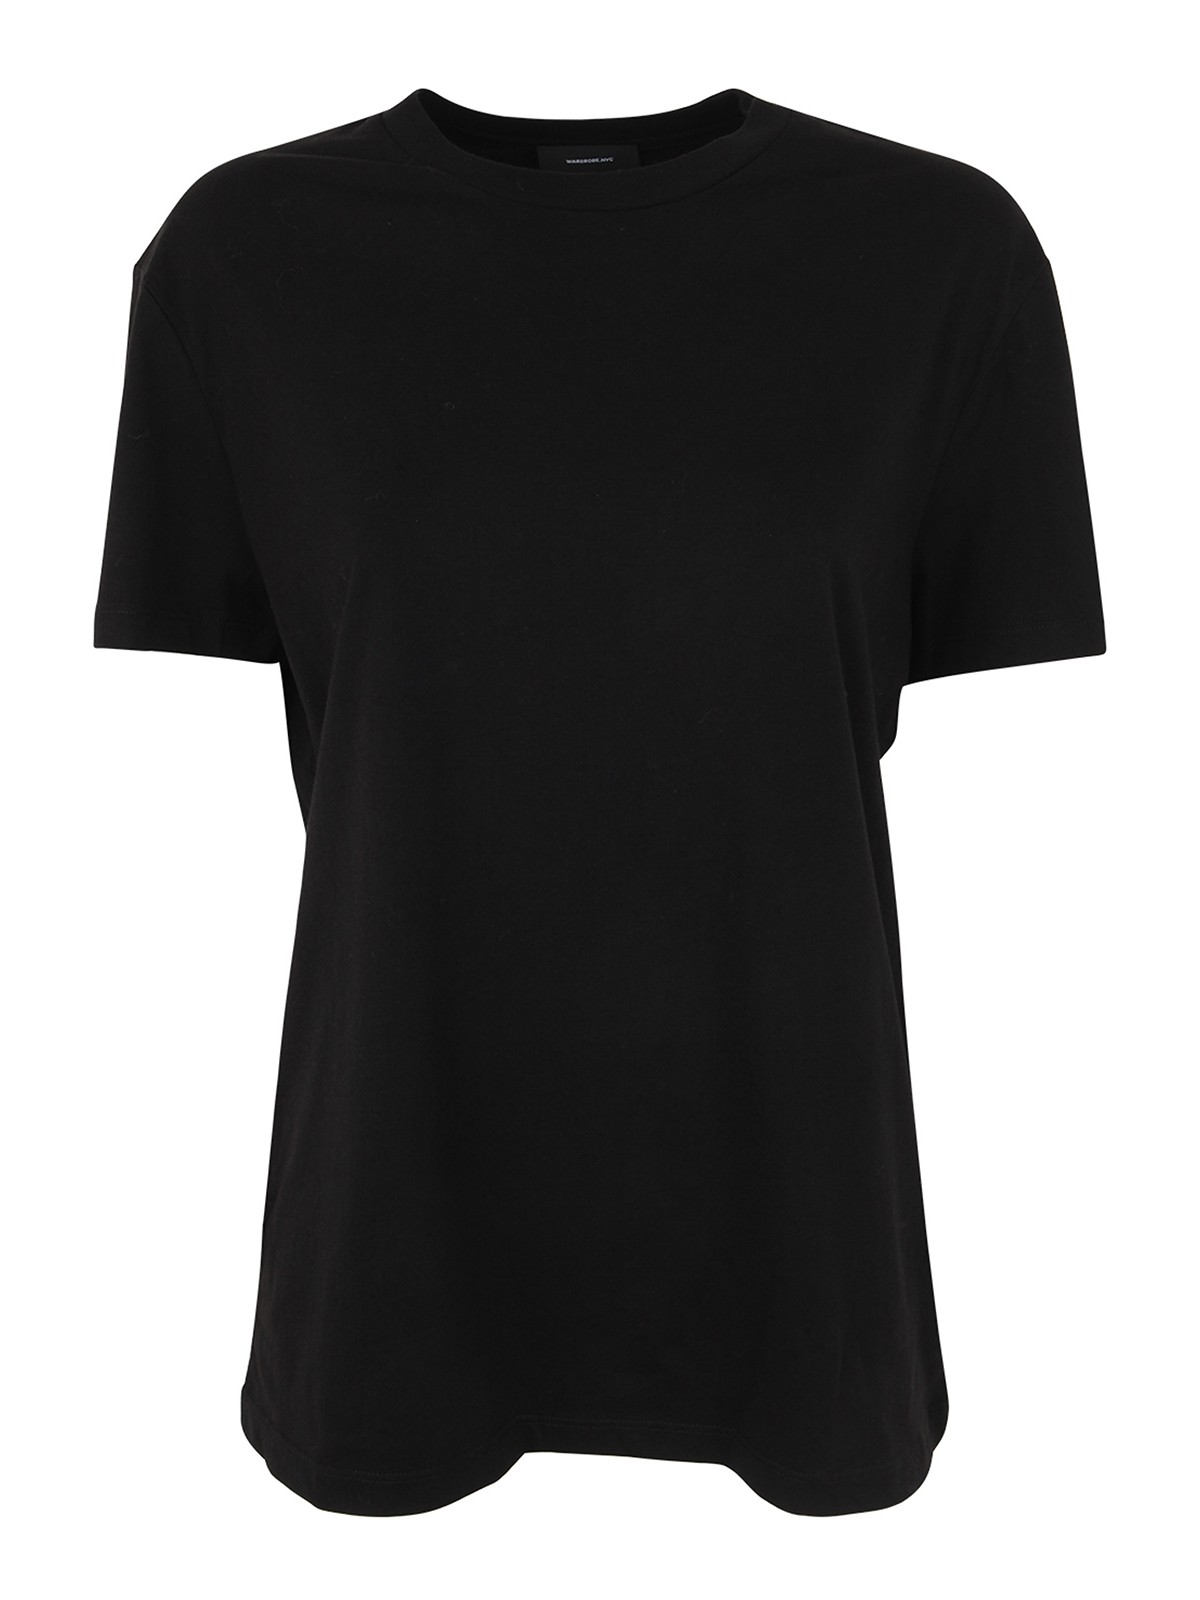 Wardrobe.nyc Classic T-shirt In Black